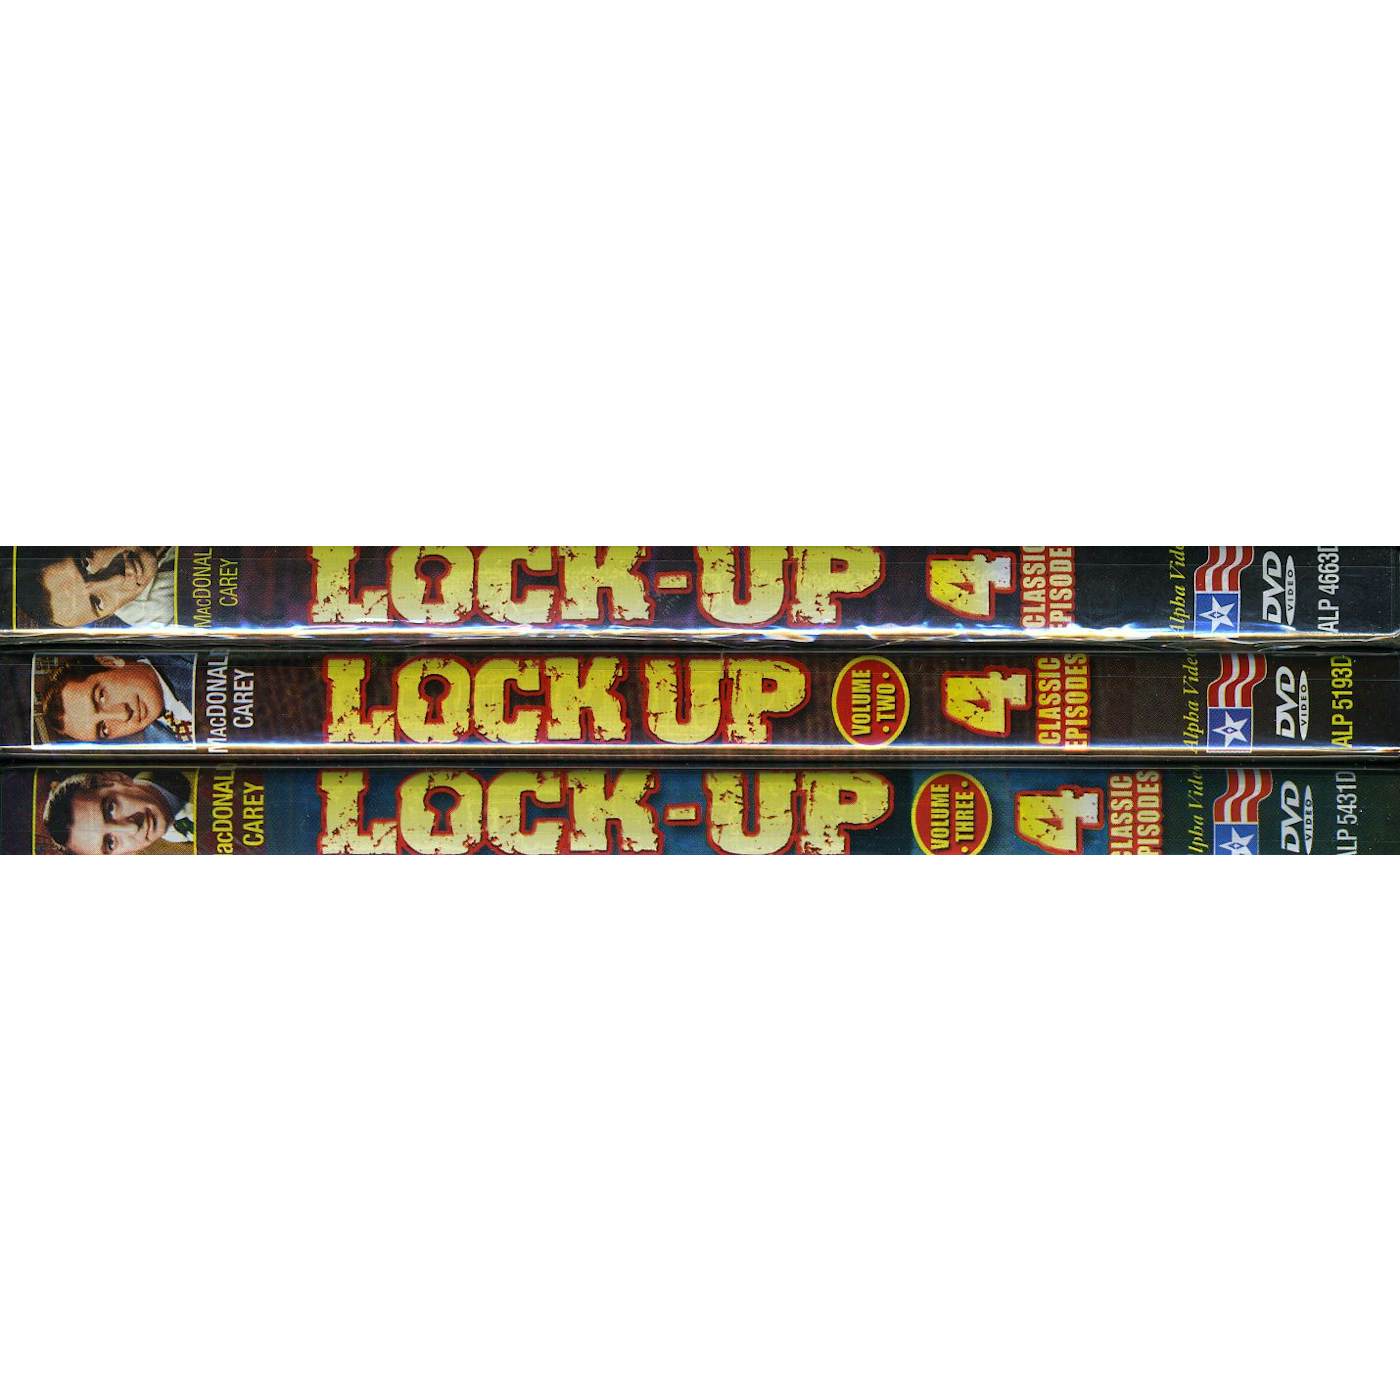 LOCK UP DVD